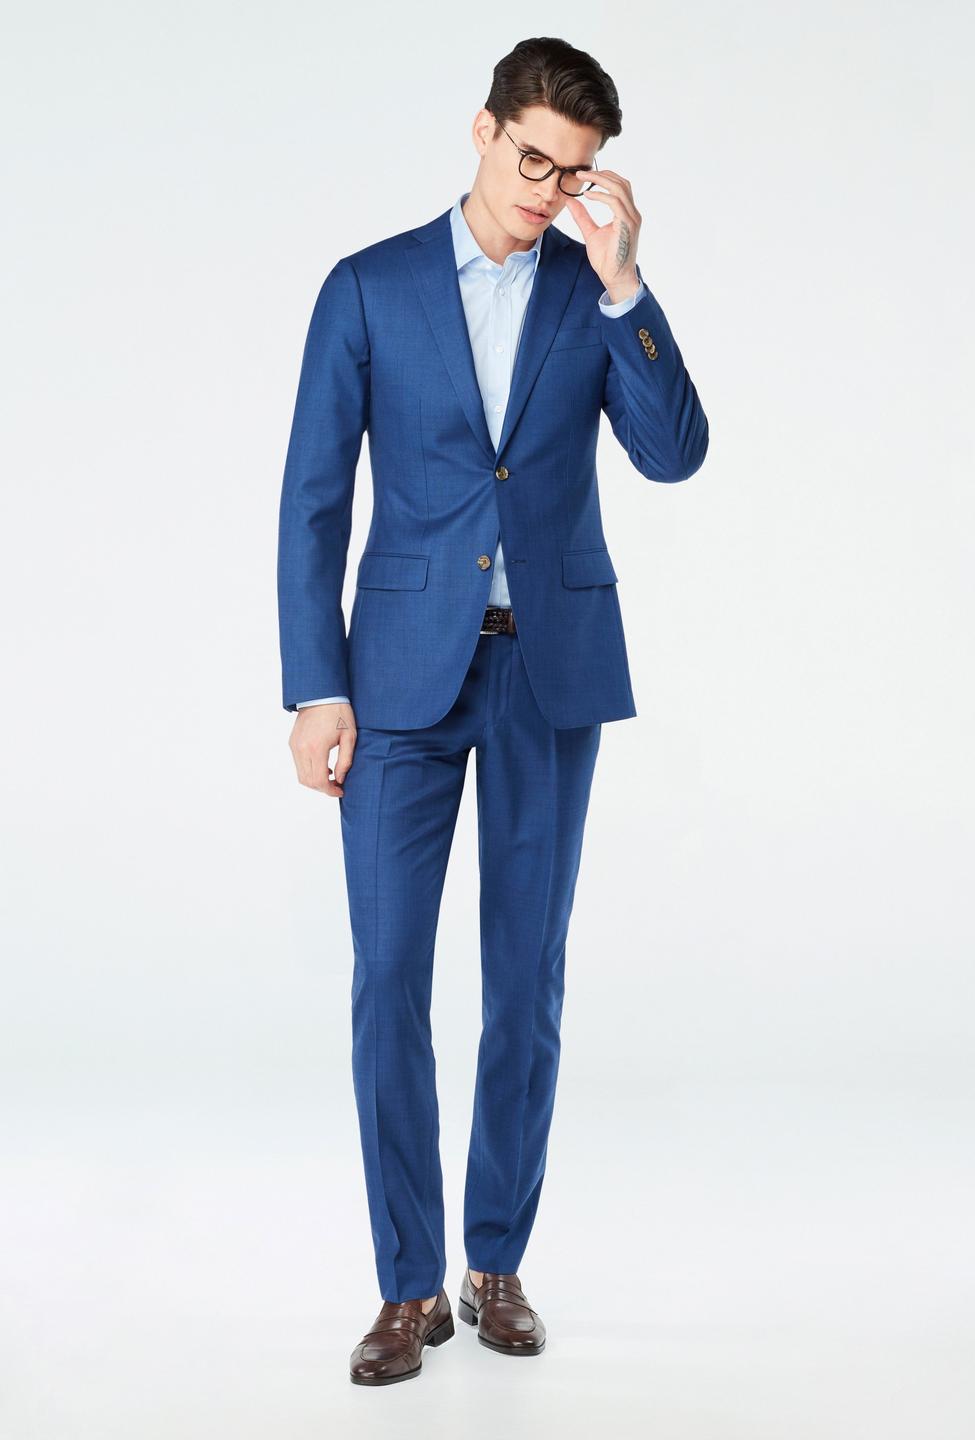 Blue blazer - Hayle Solid Design from Premium Indochino Collection